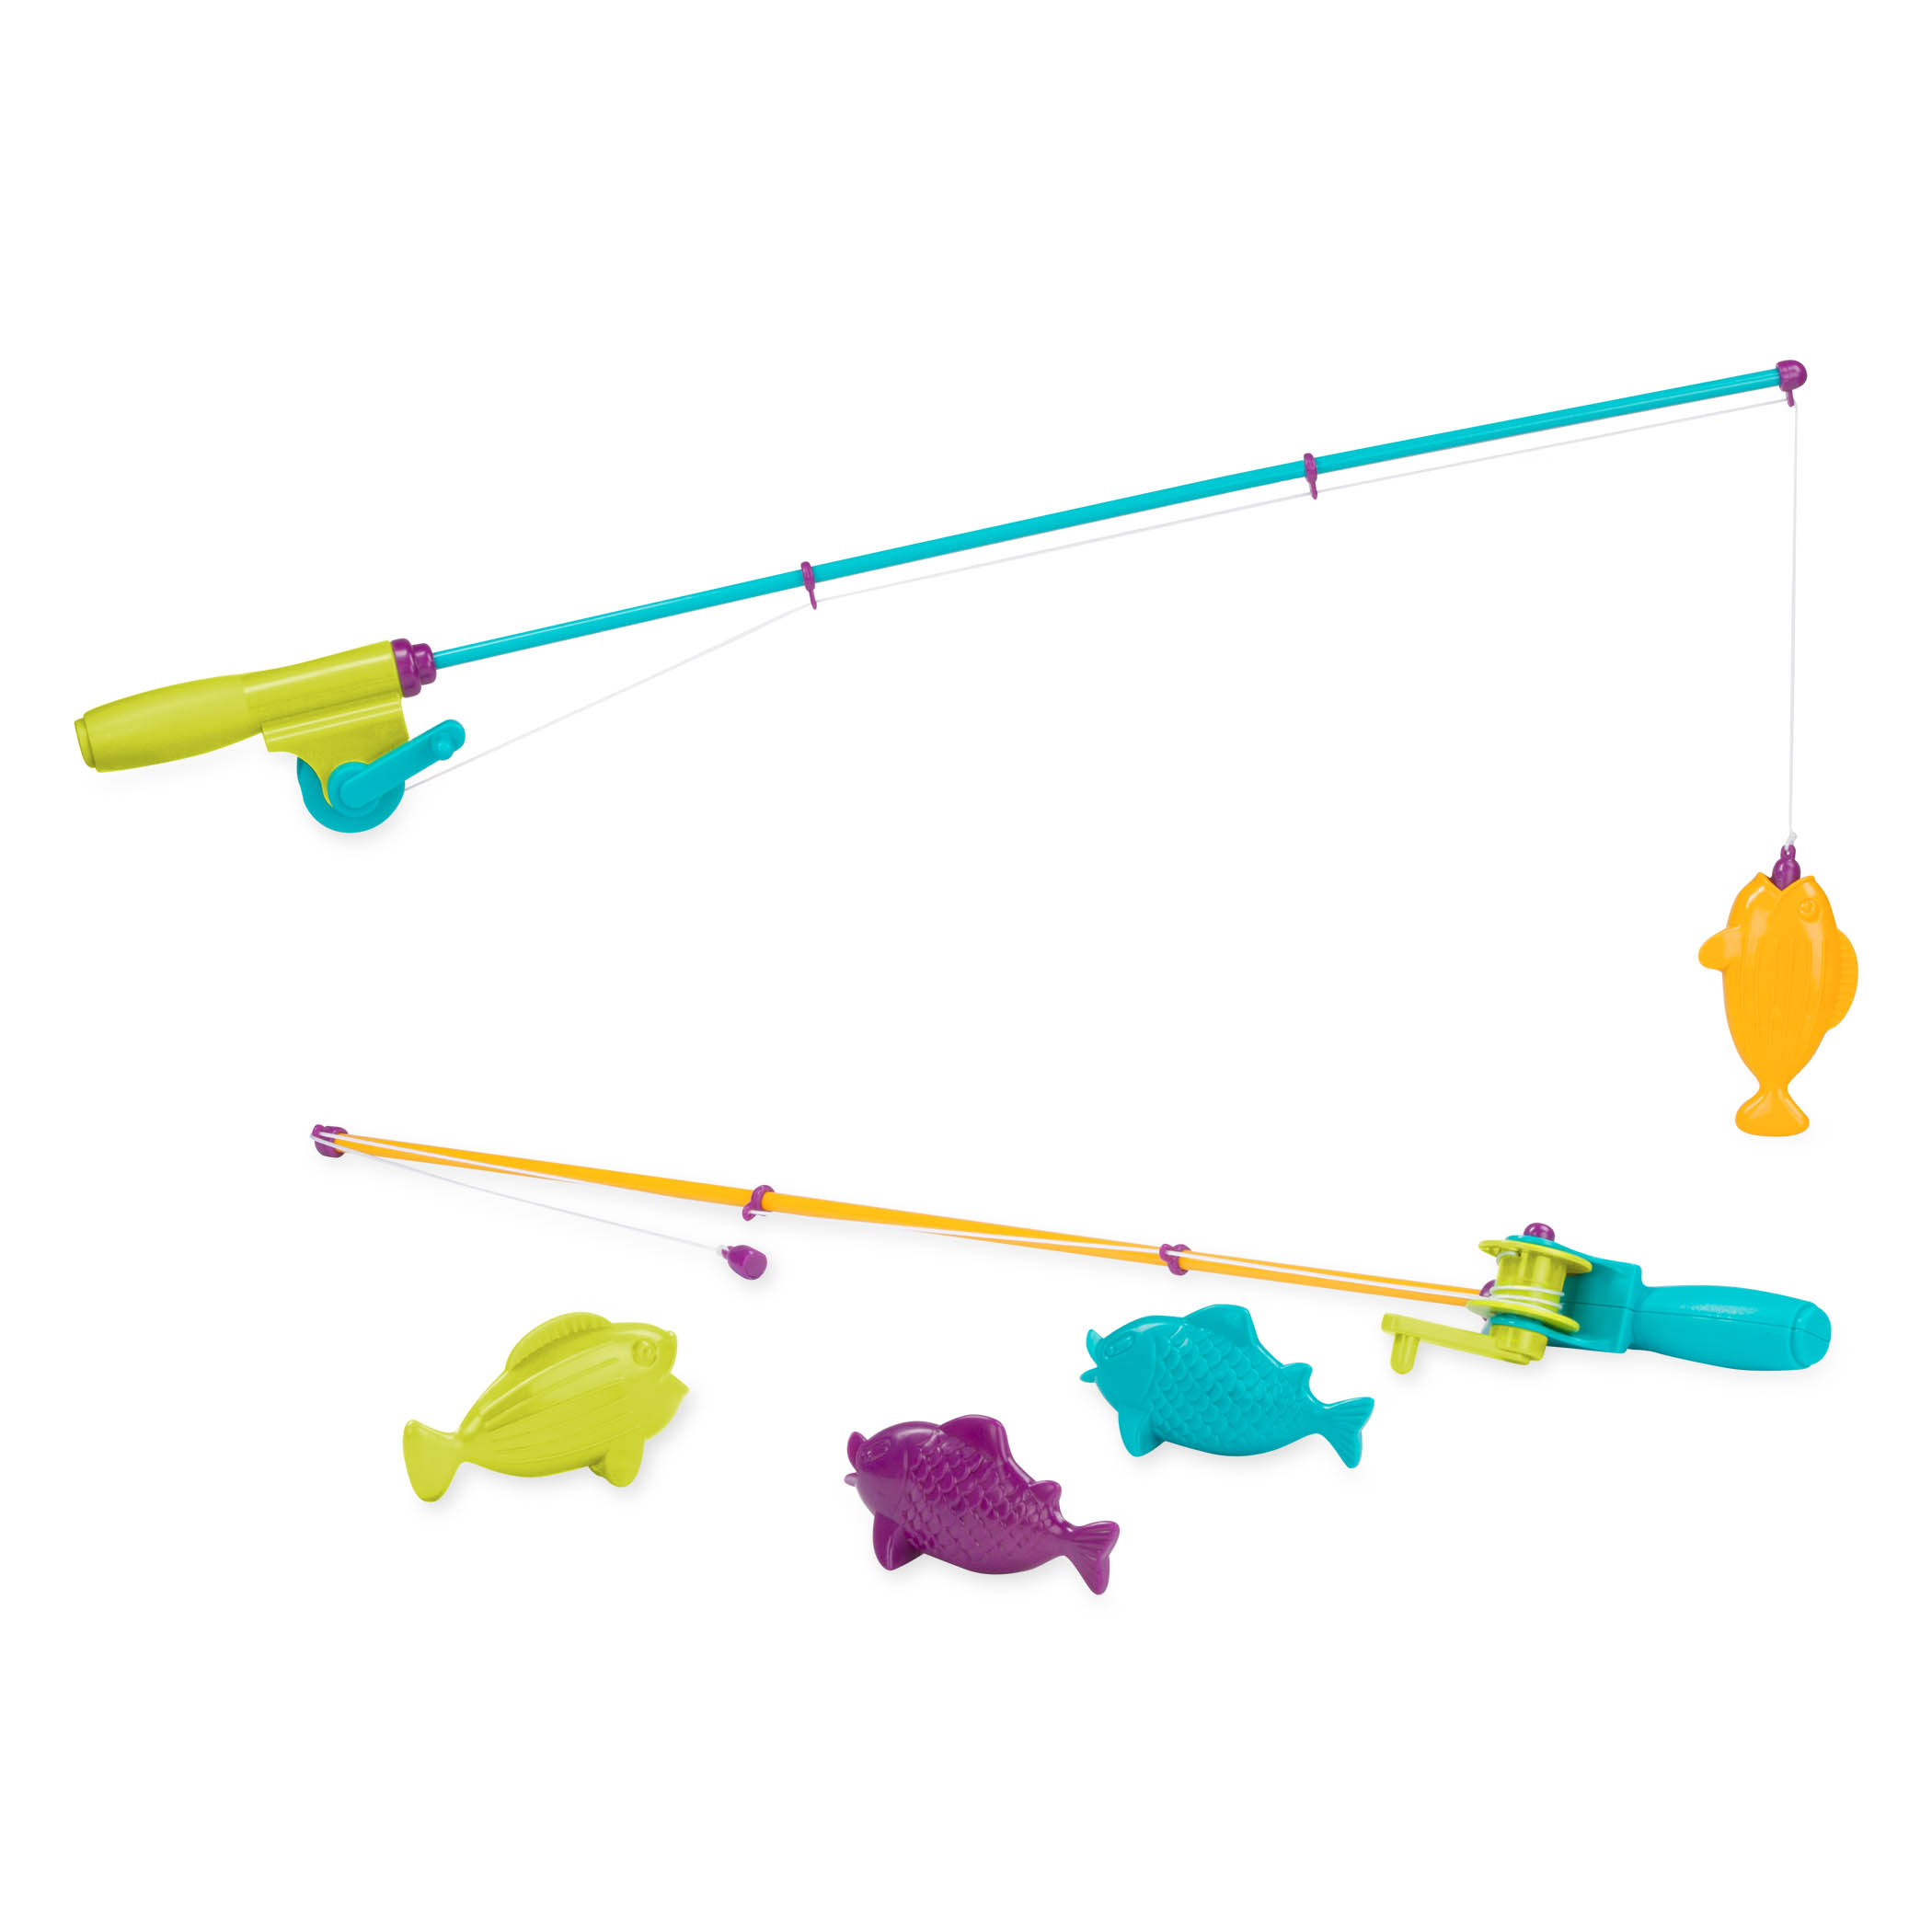 Magnetic Fishing Toys Kids, Children Magnetic Fishing